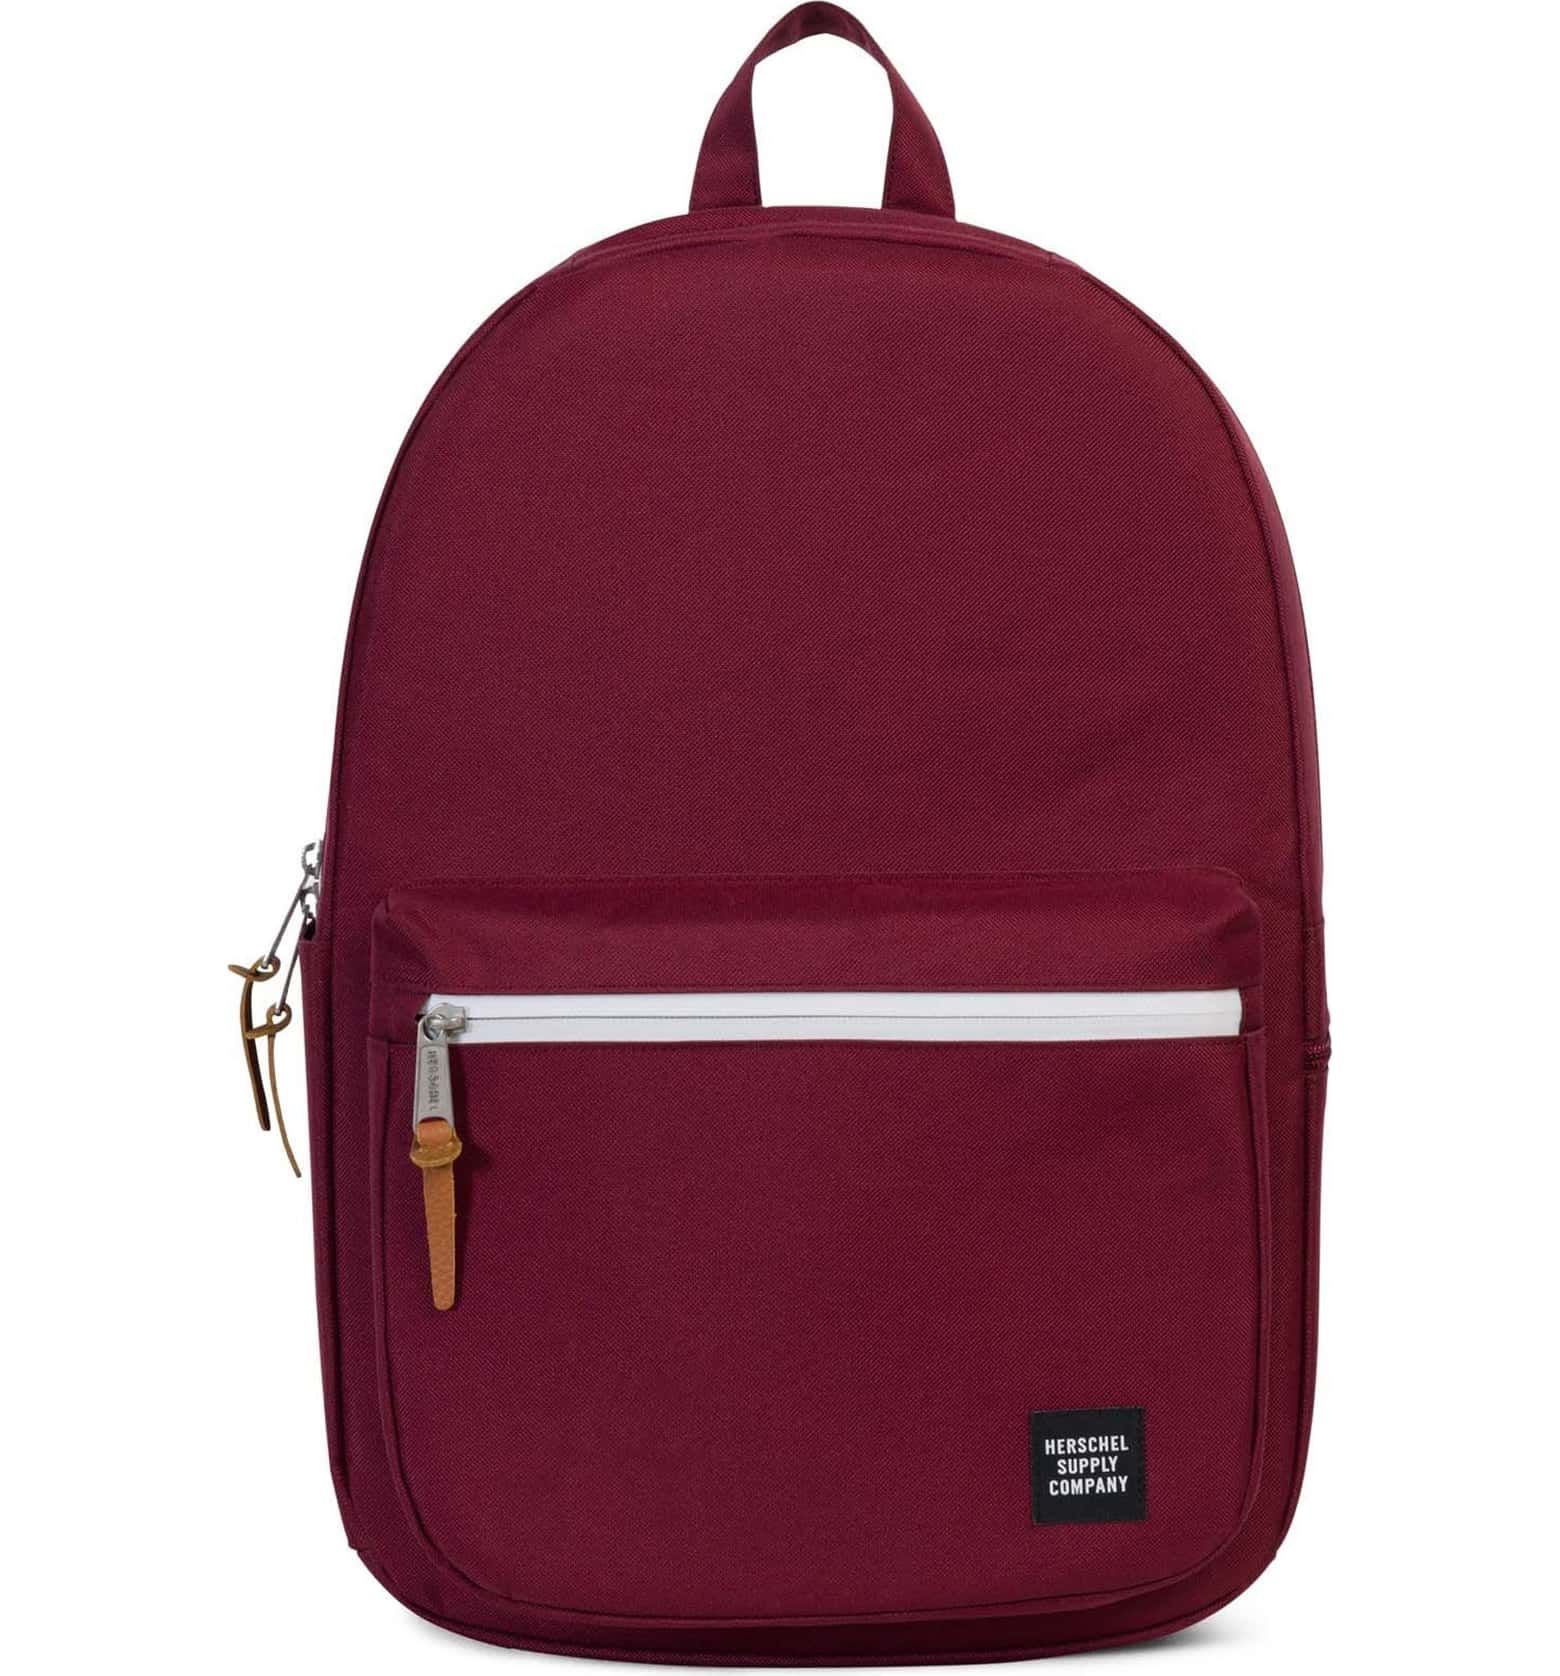 Herschel Supply Co. Harrison backpack